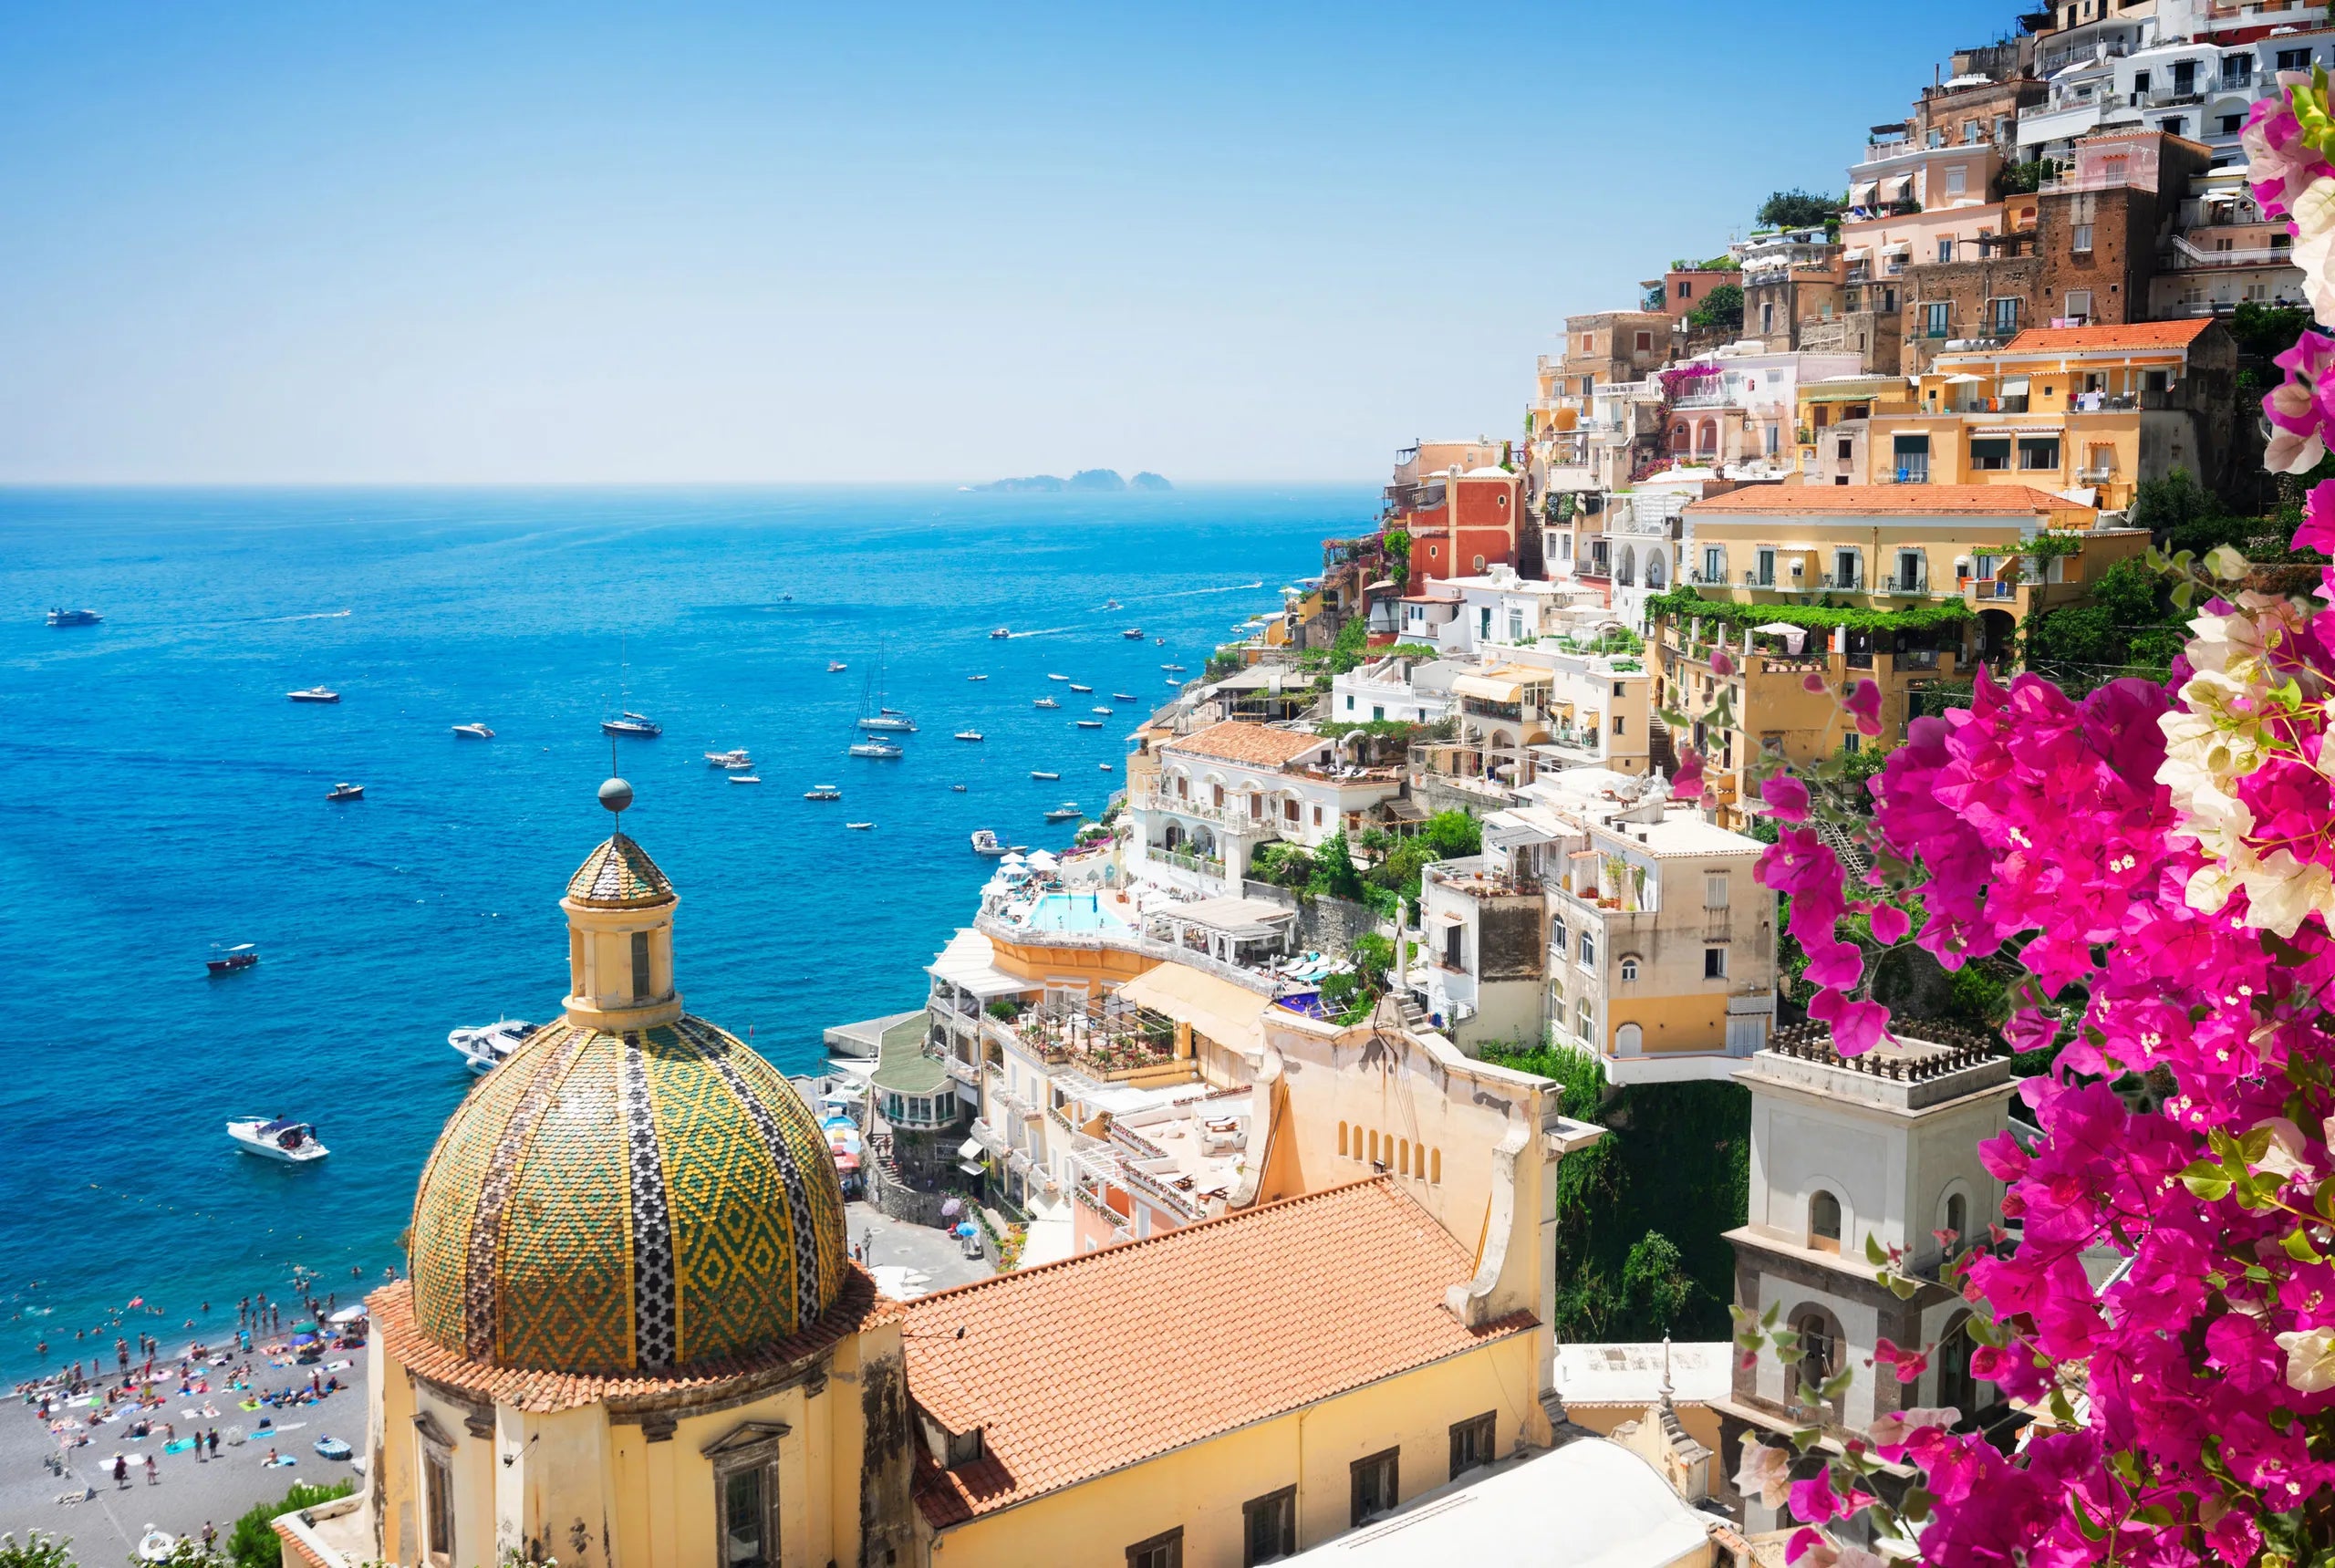 00-story-image-amalfi-coast-italy-travel-guide.webp__PID:701d637c-8bbd-478b-a6a1-86d2dd0d528c